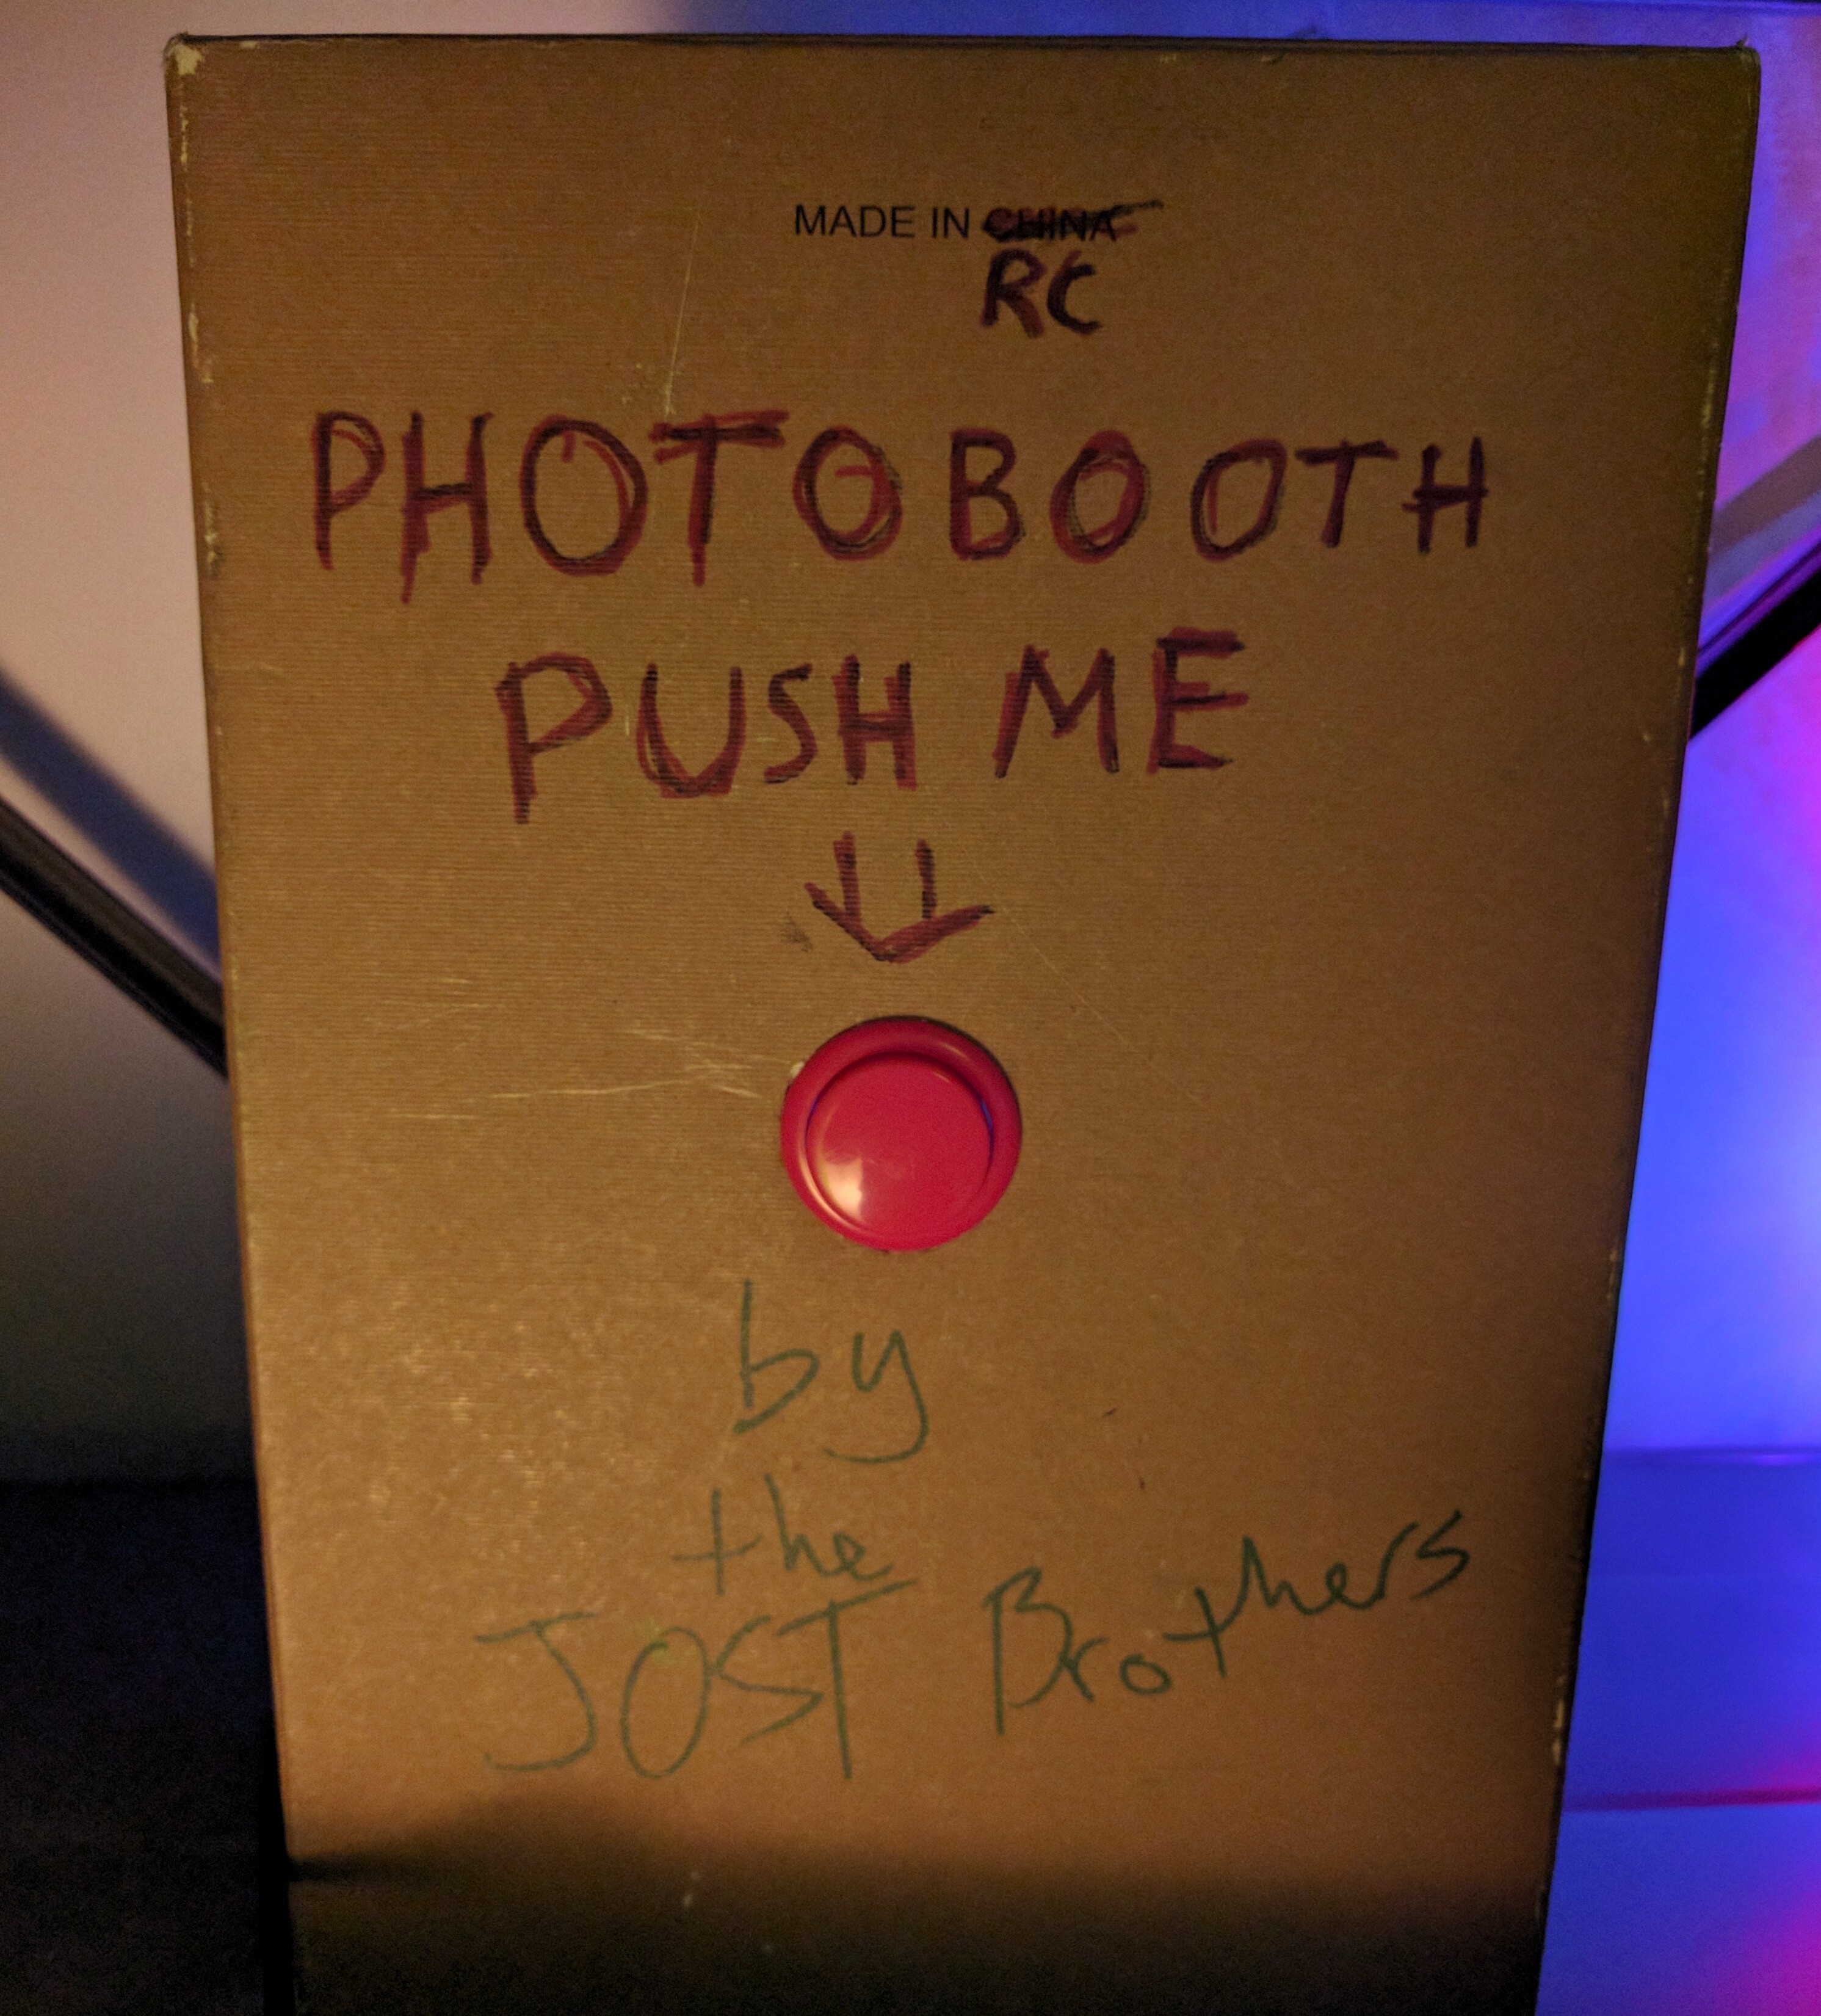 Photobooth dashboard